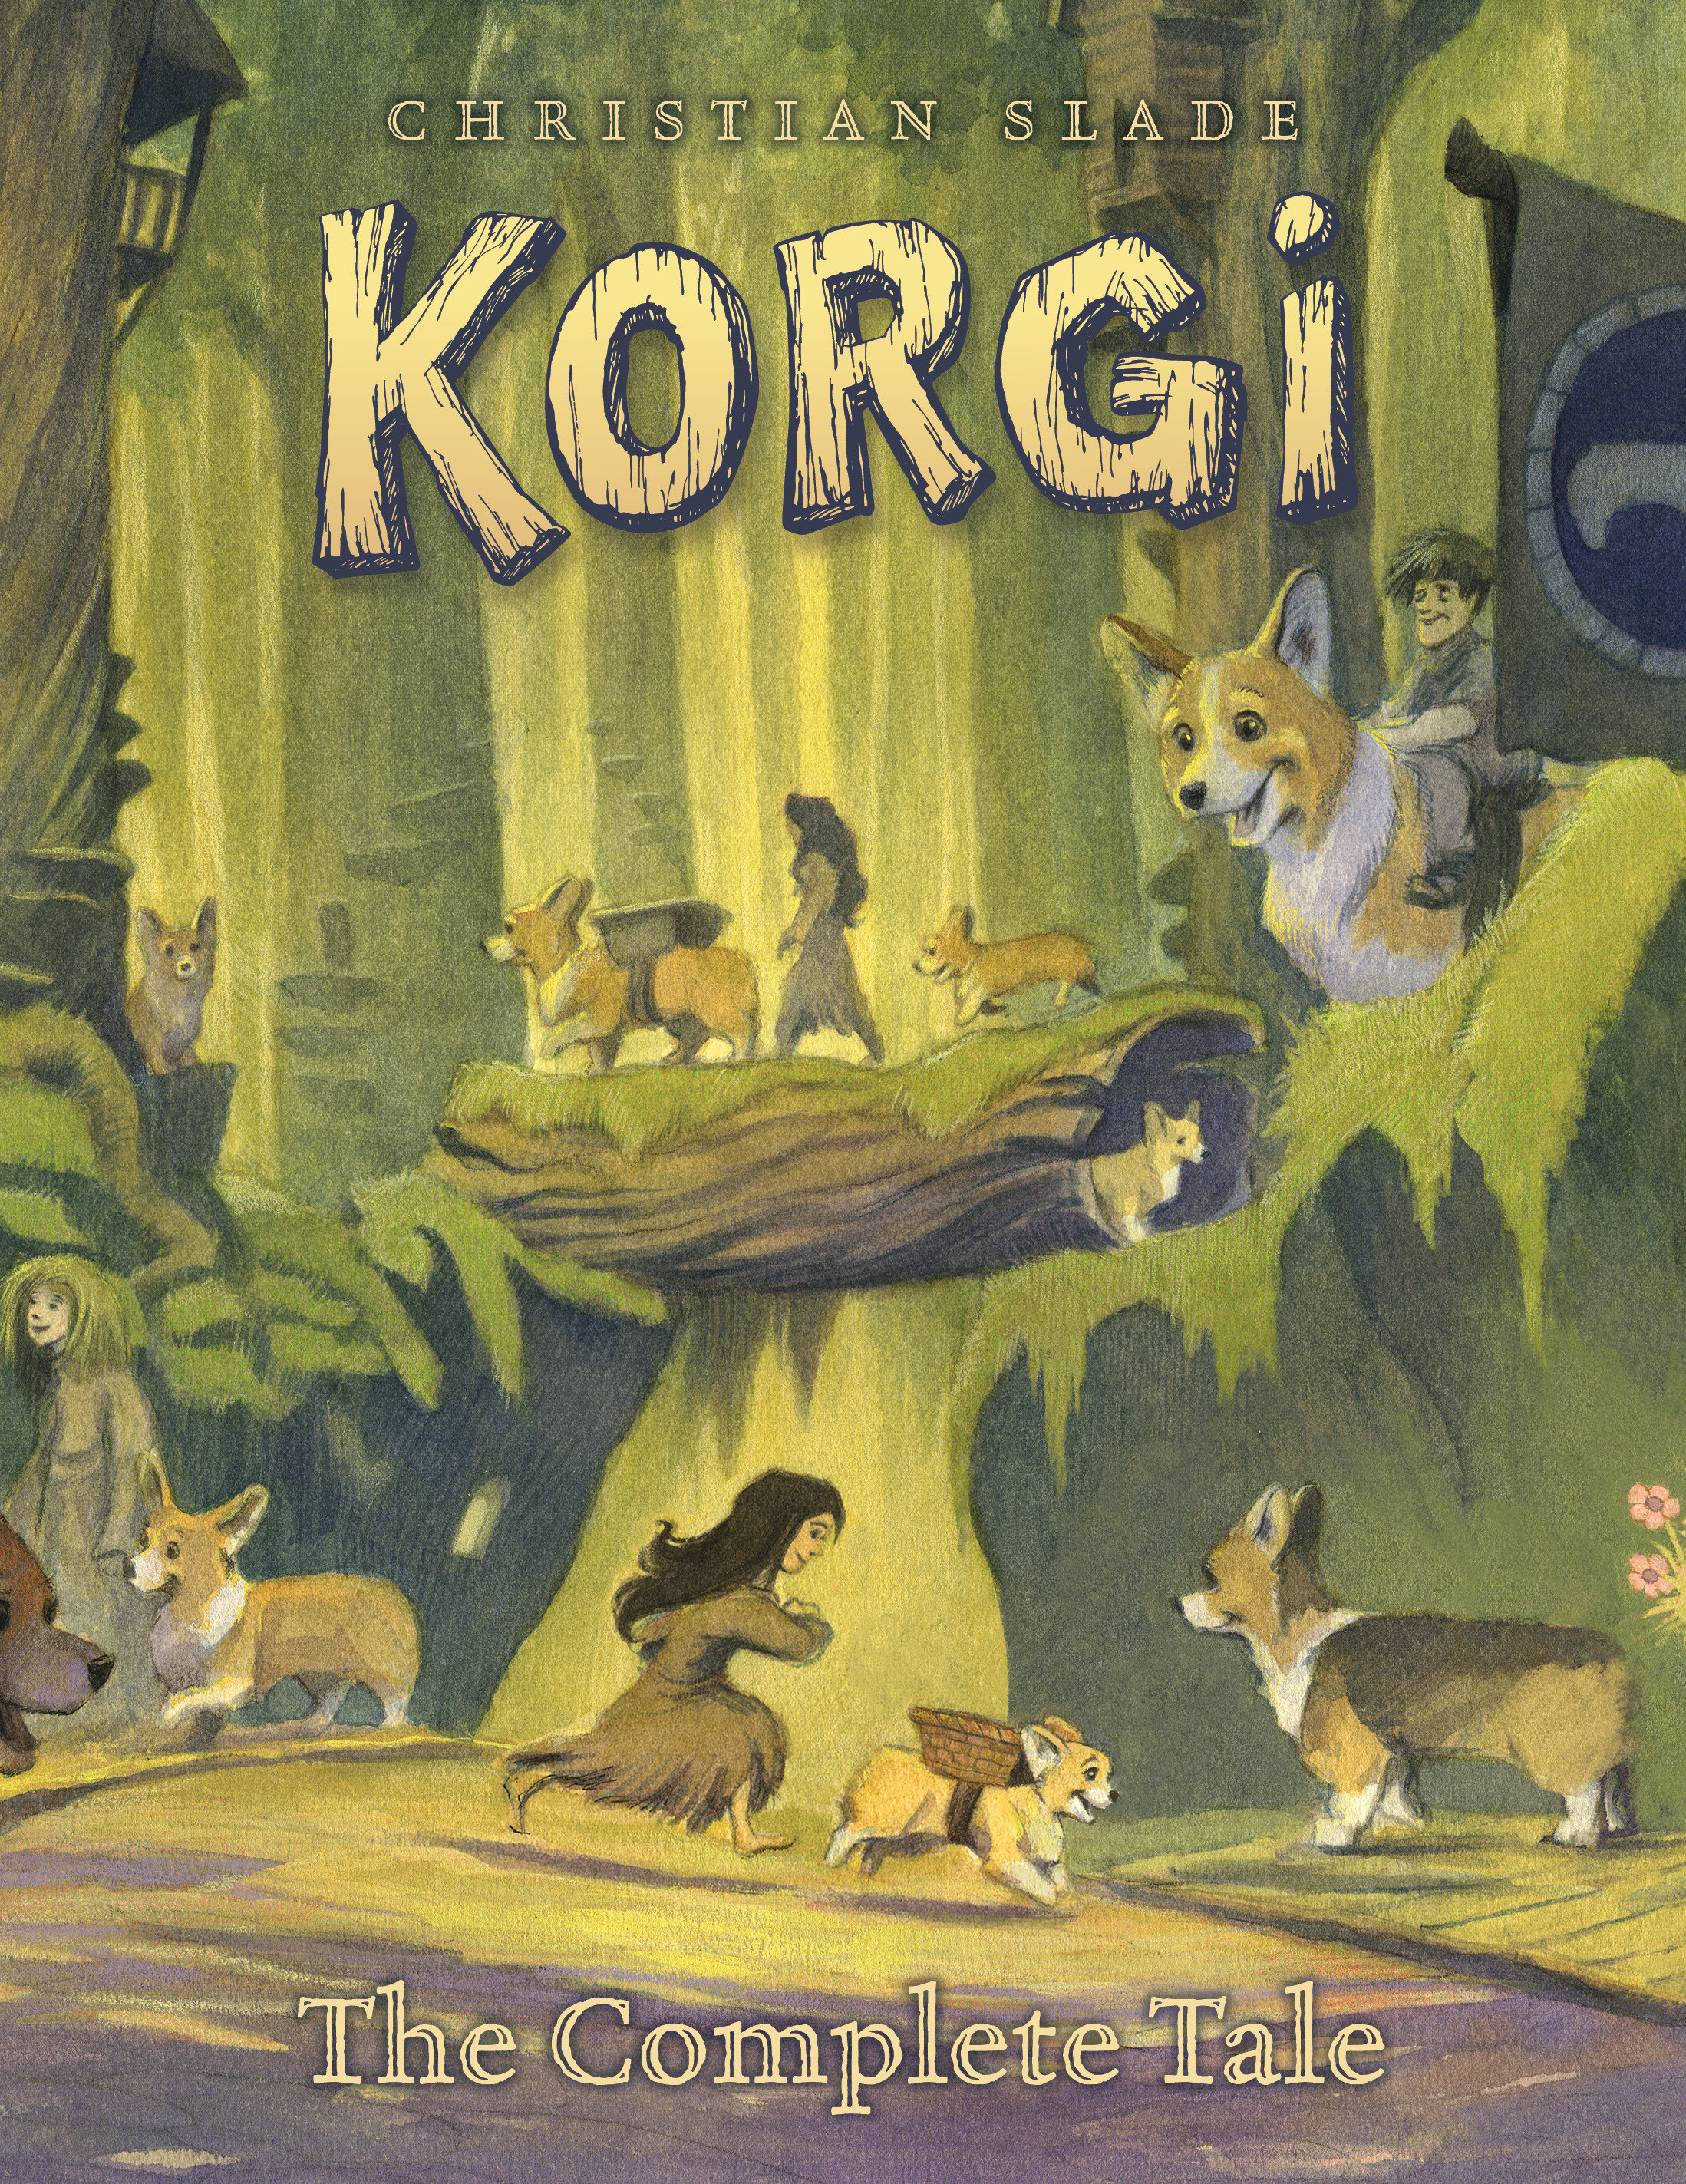 Korgi: The Complete Tale Graphic Novel